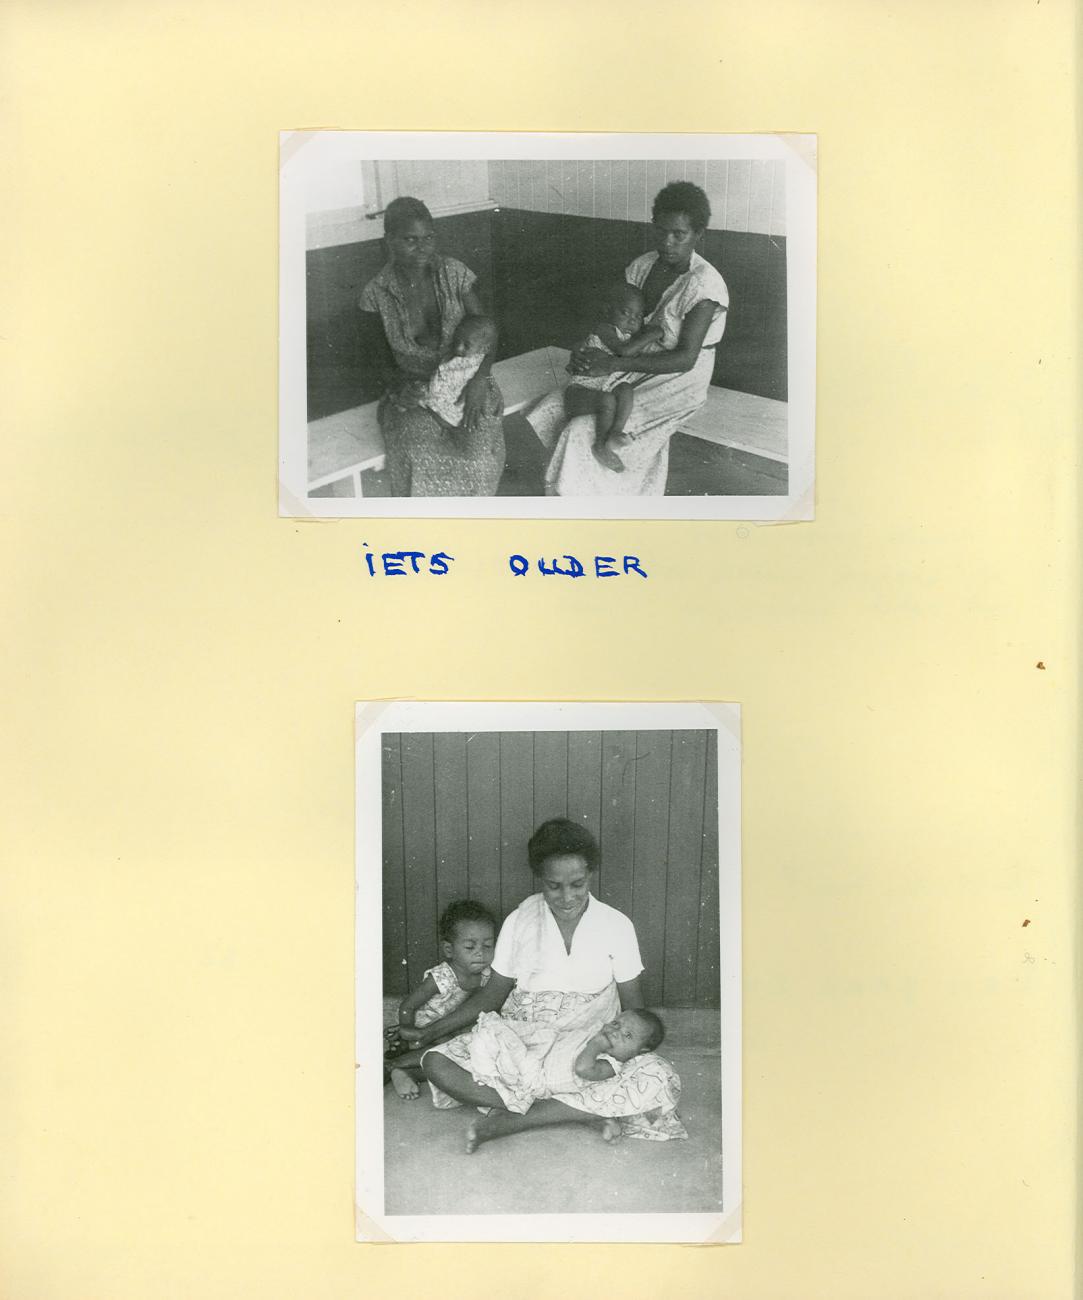 BD/83/12 - 
Papua women with children at the Sarmi hospital
